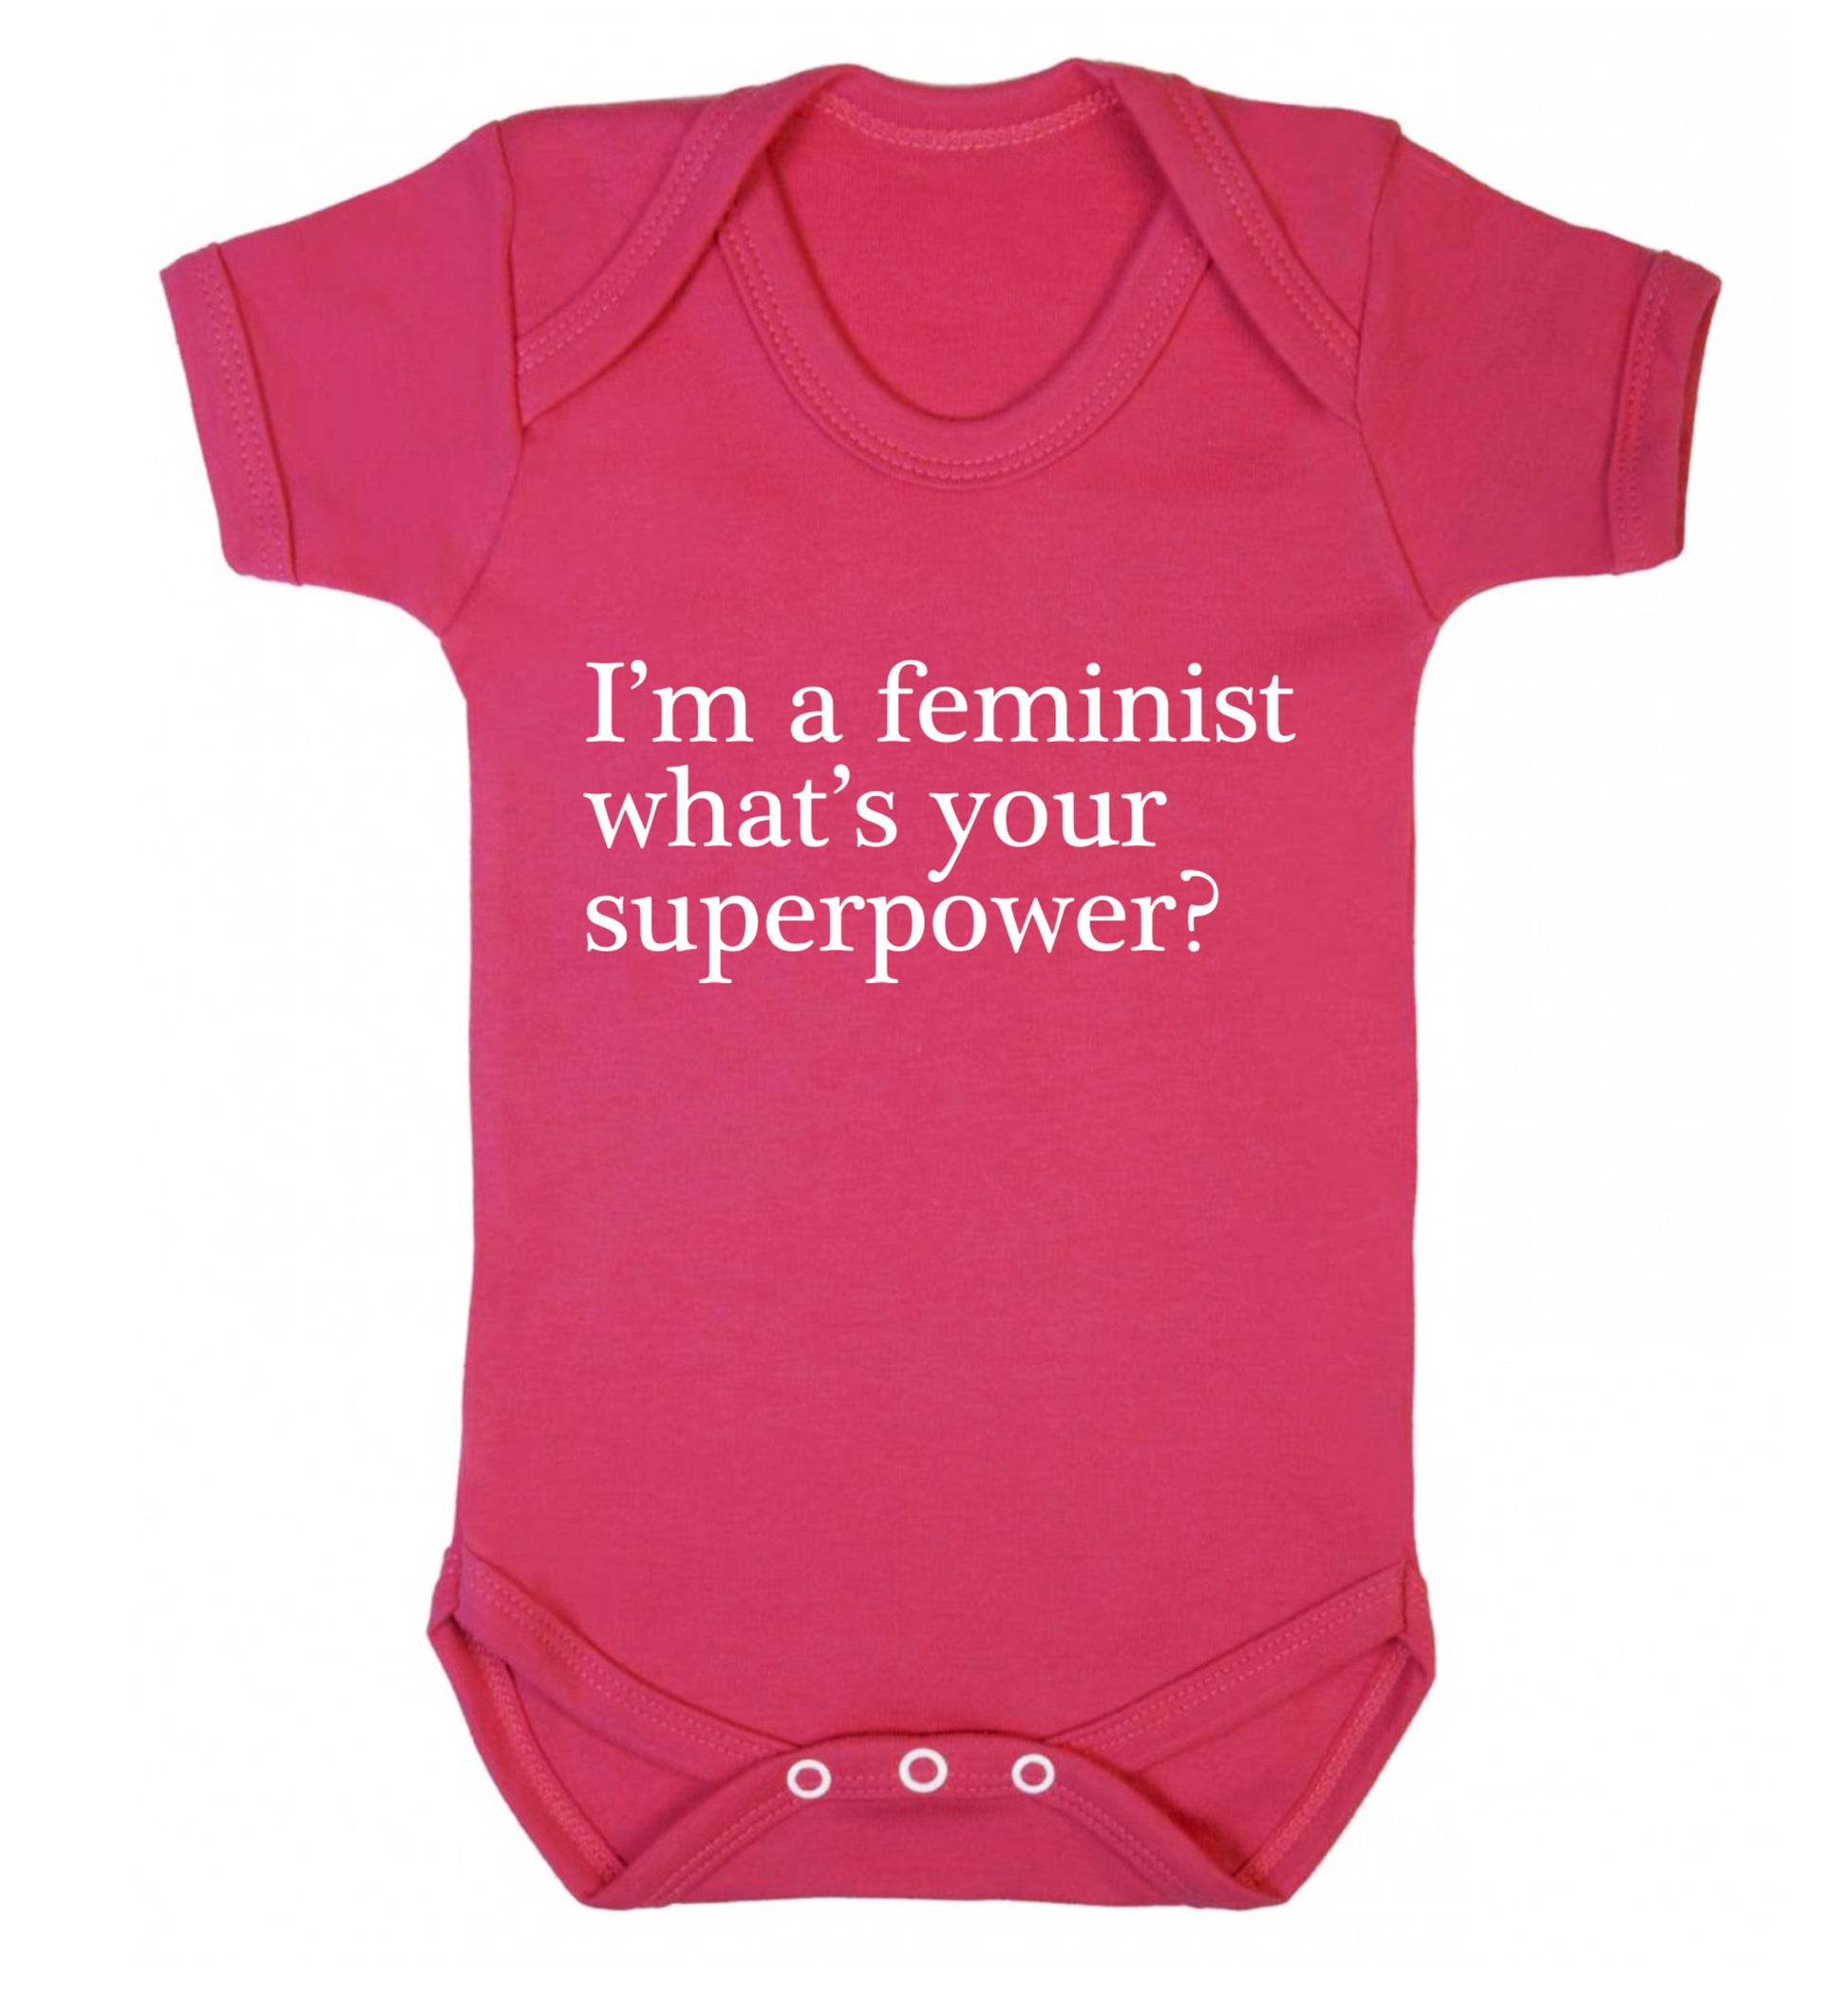 I'm a feminist what's your superpower? Baby Vest dark pink 18-24 months